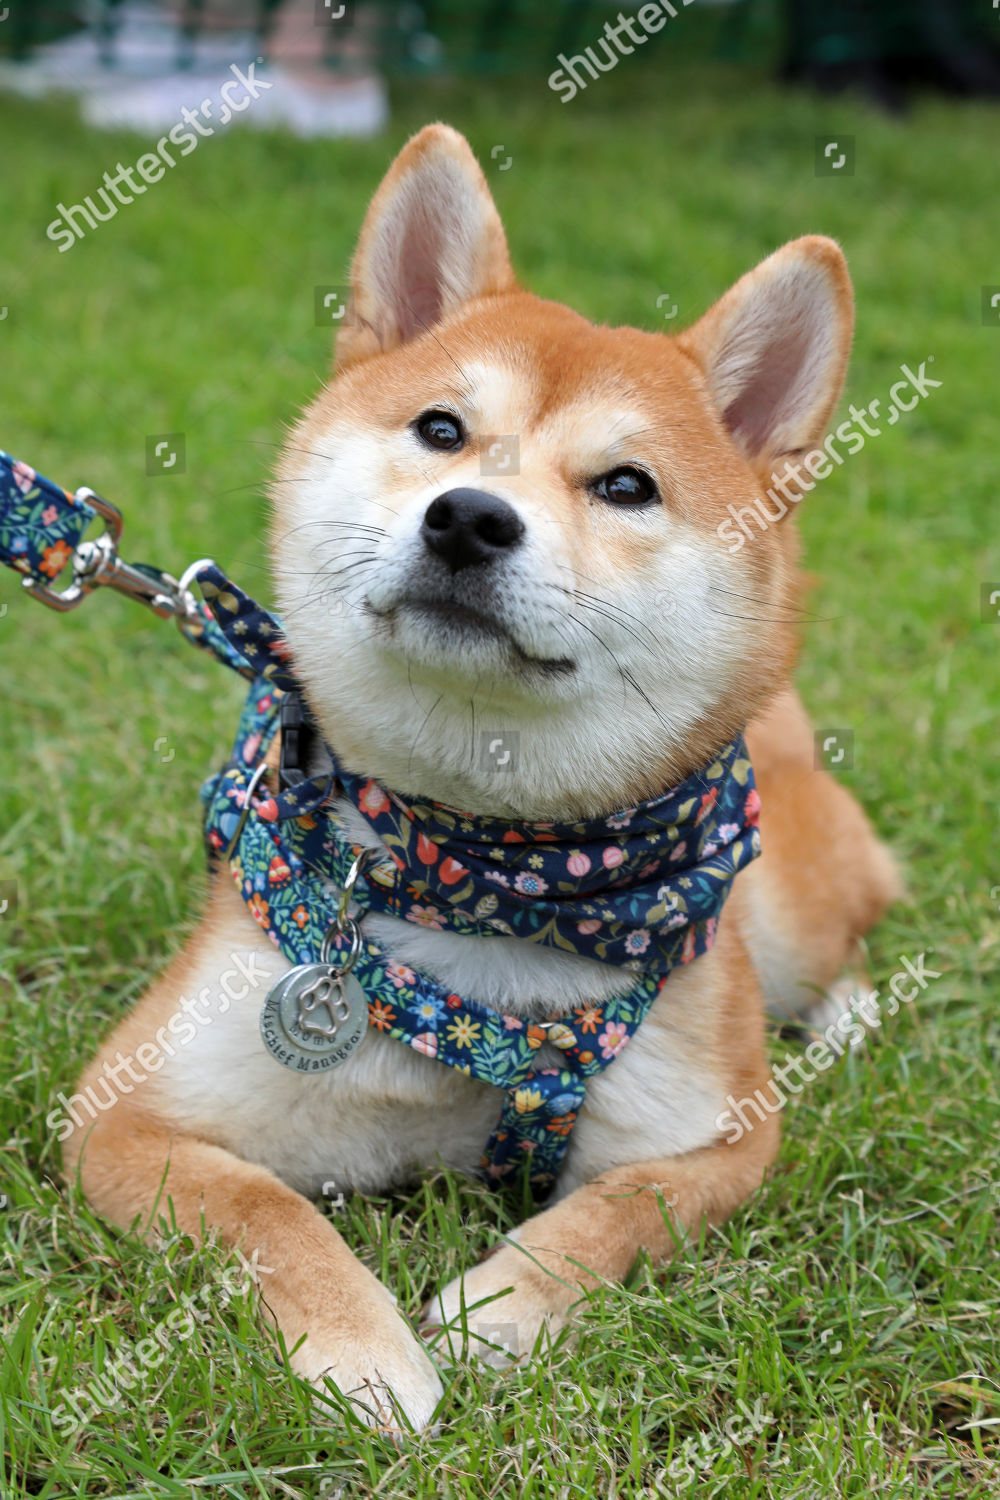 Momo Shiba Inu All Dogs Matter Bark Editorial Stock Photo